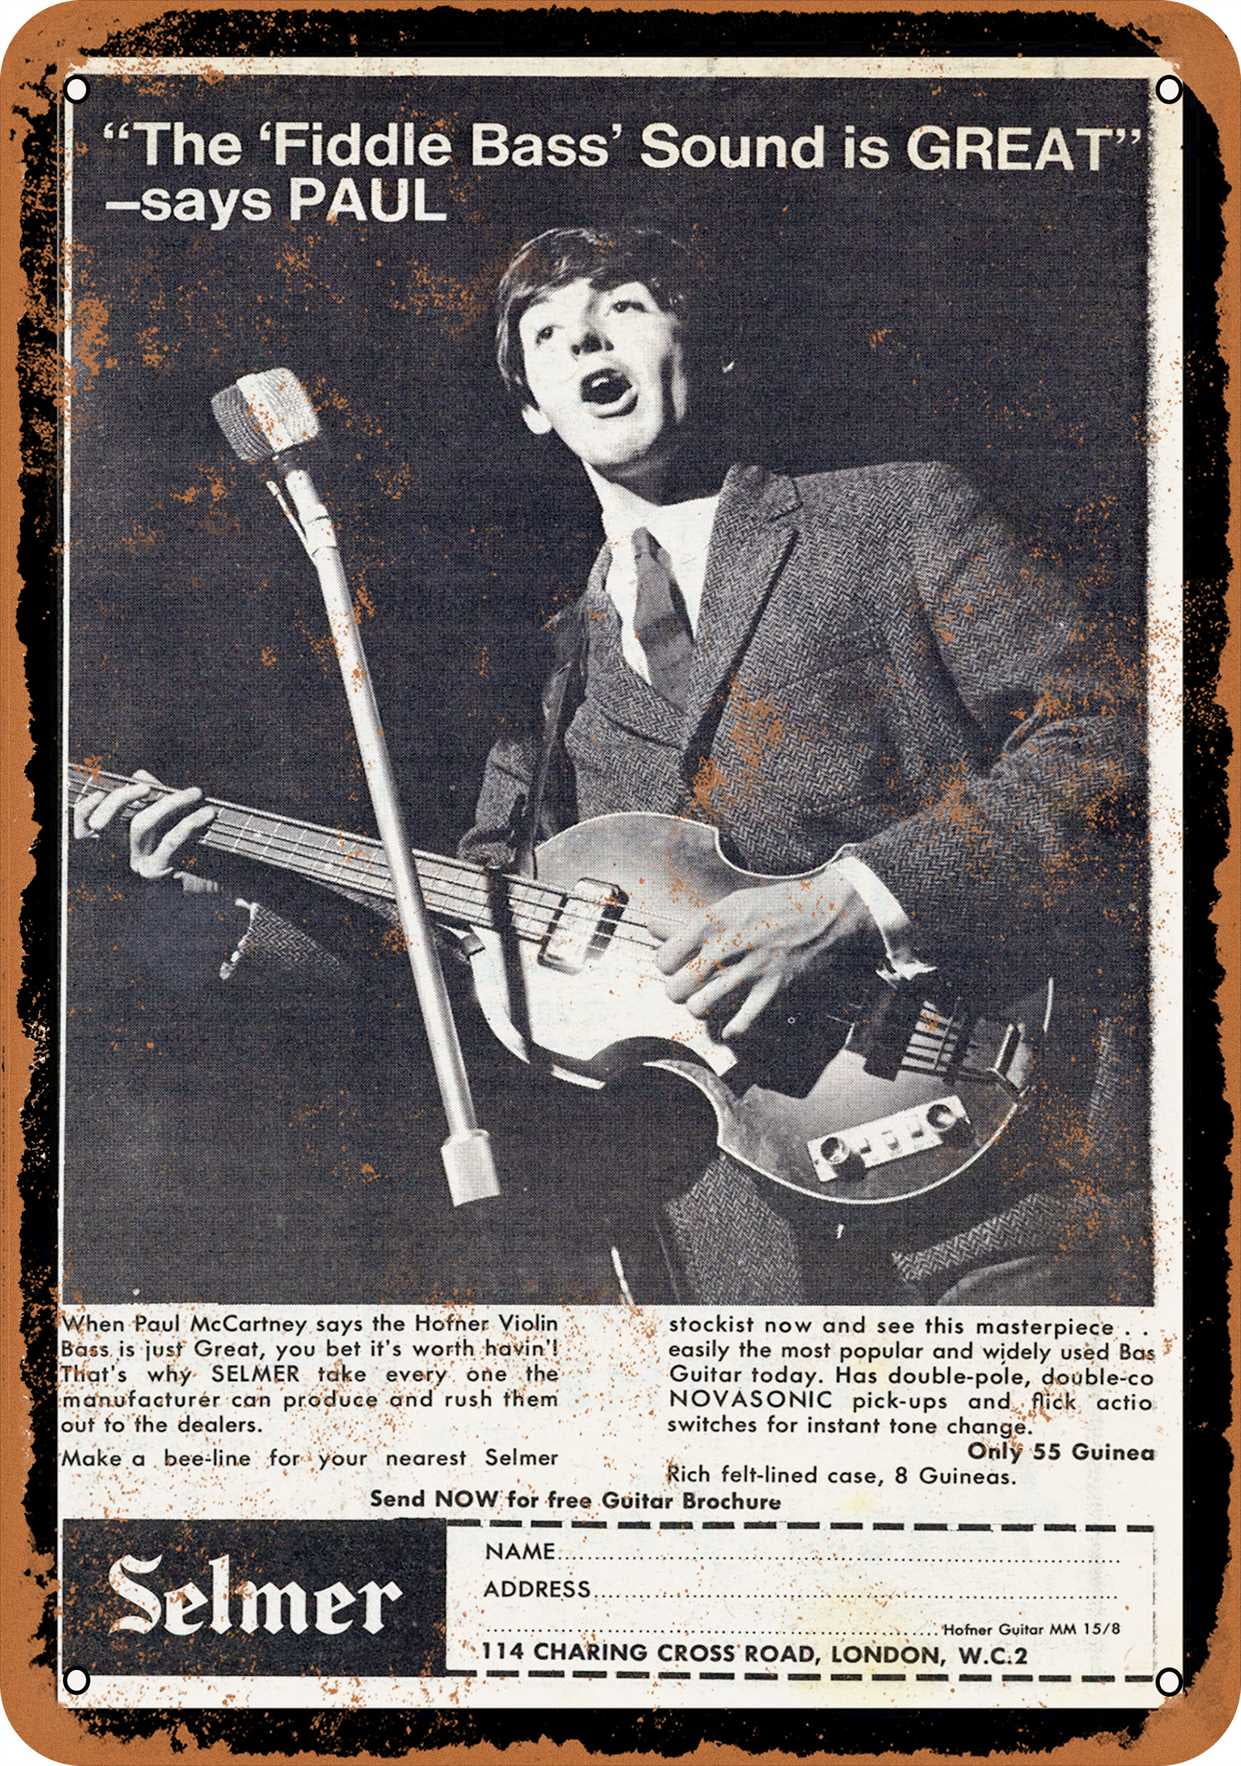 DL size Paul McCartney's Hofner 500/1 Jubilee Violin Bass Greeting Card 